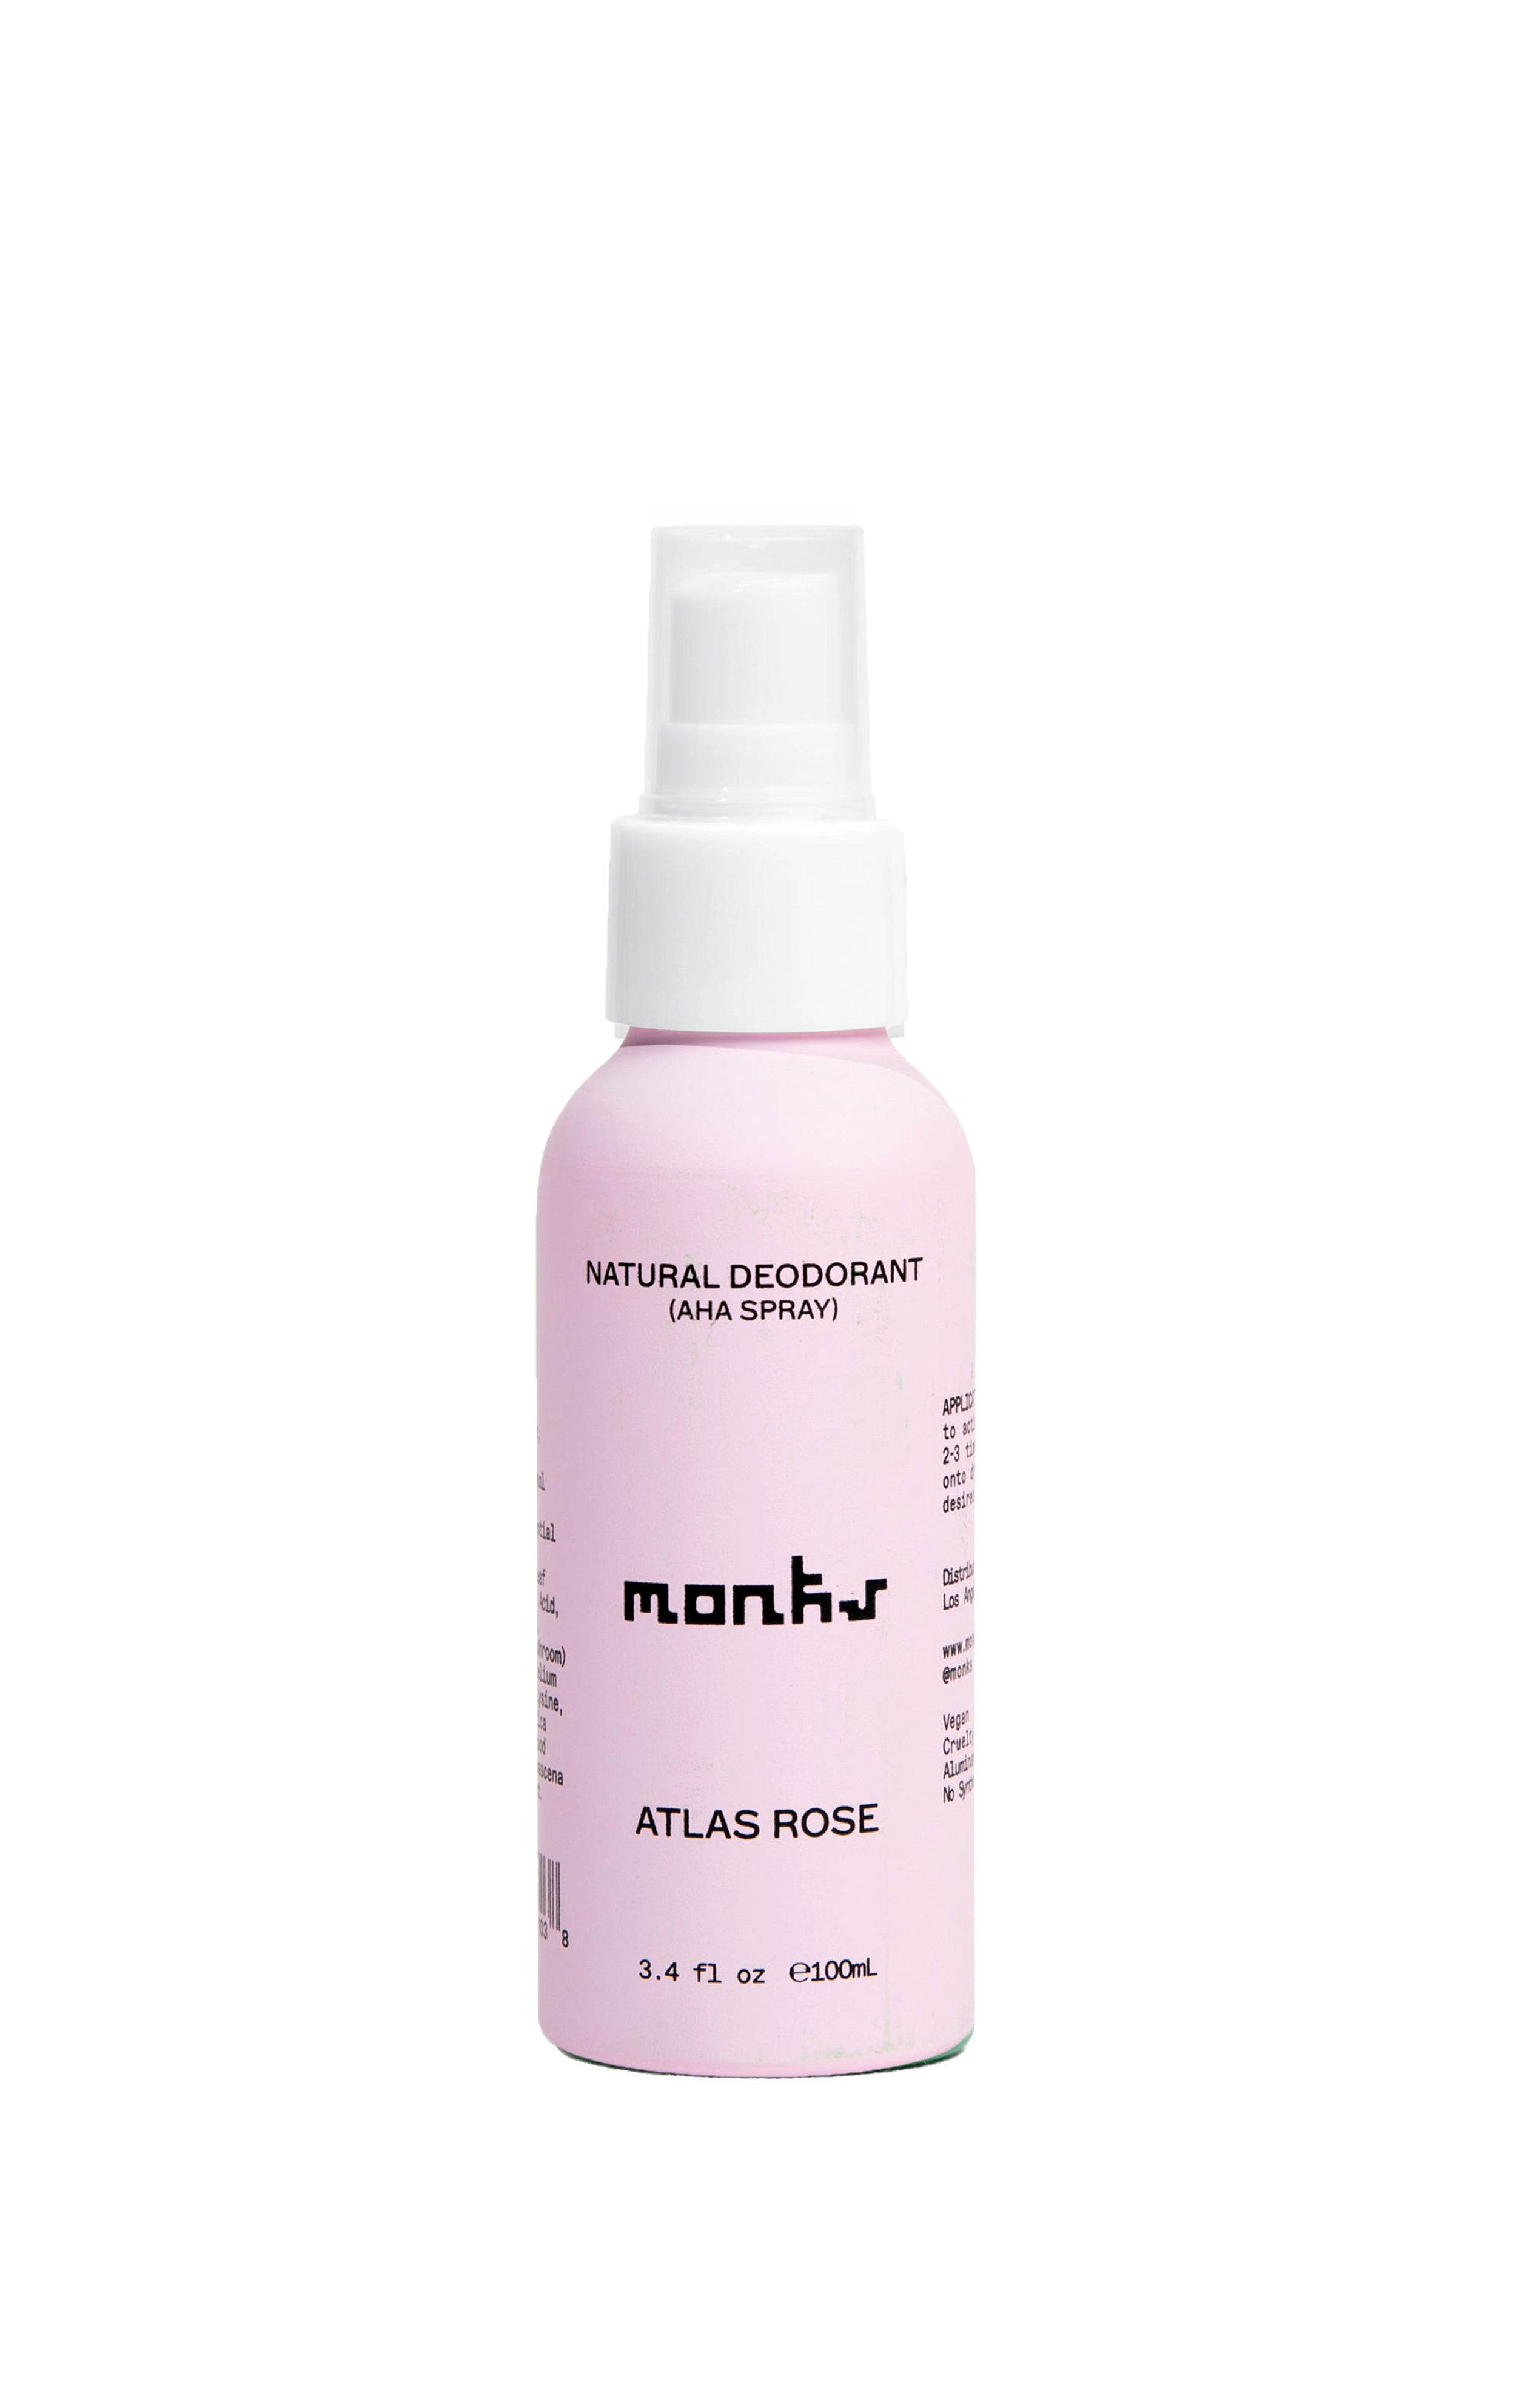 Monks - Atlas Rose (Natural Deodorant Spray) - 3.4 fl oz